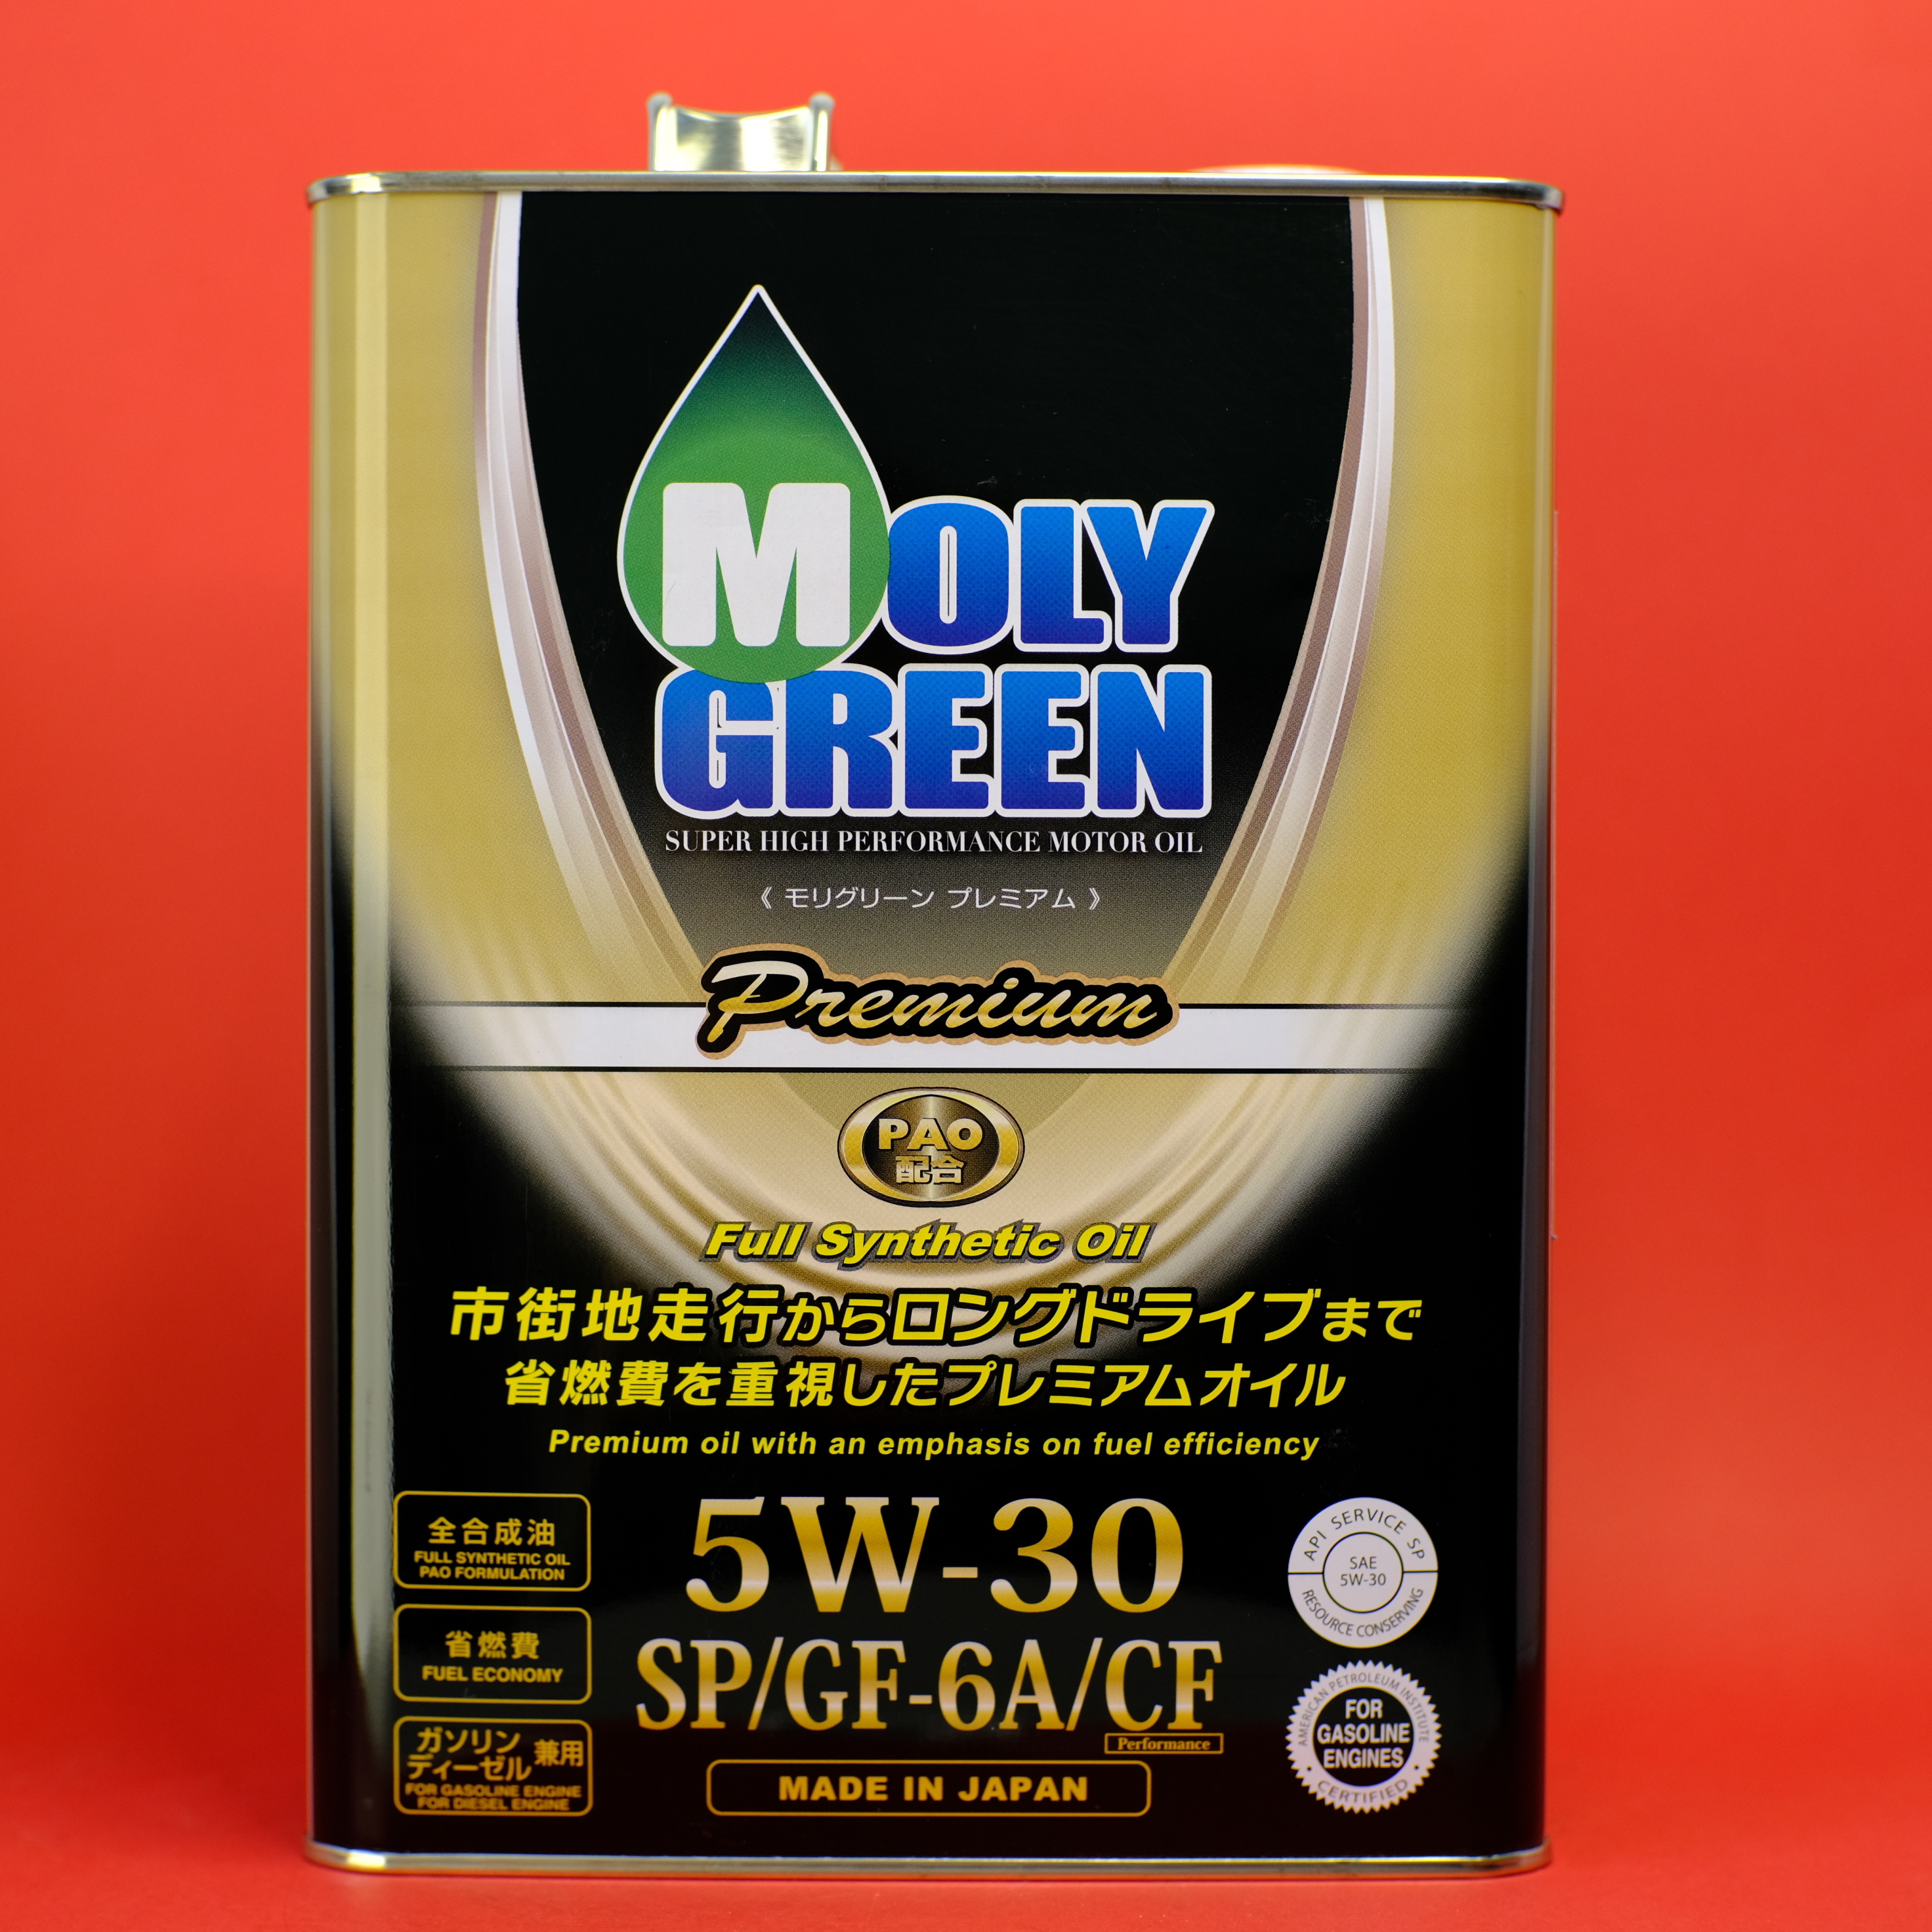 Моли грин 5w30 купить. Моторное масло Moly Green 5w30. Моли Грин премиум 5w30. Moly Green Premium 0w30. Моли Грин премиум 5 30.